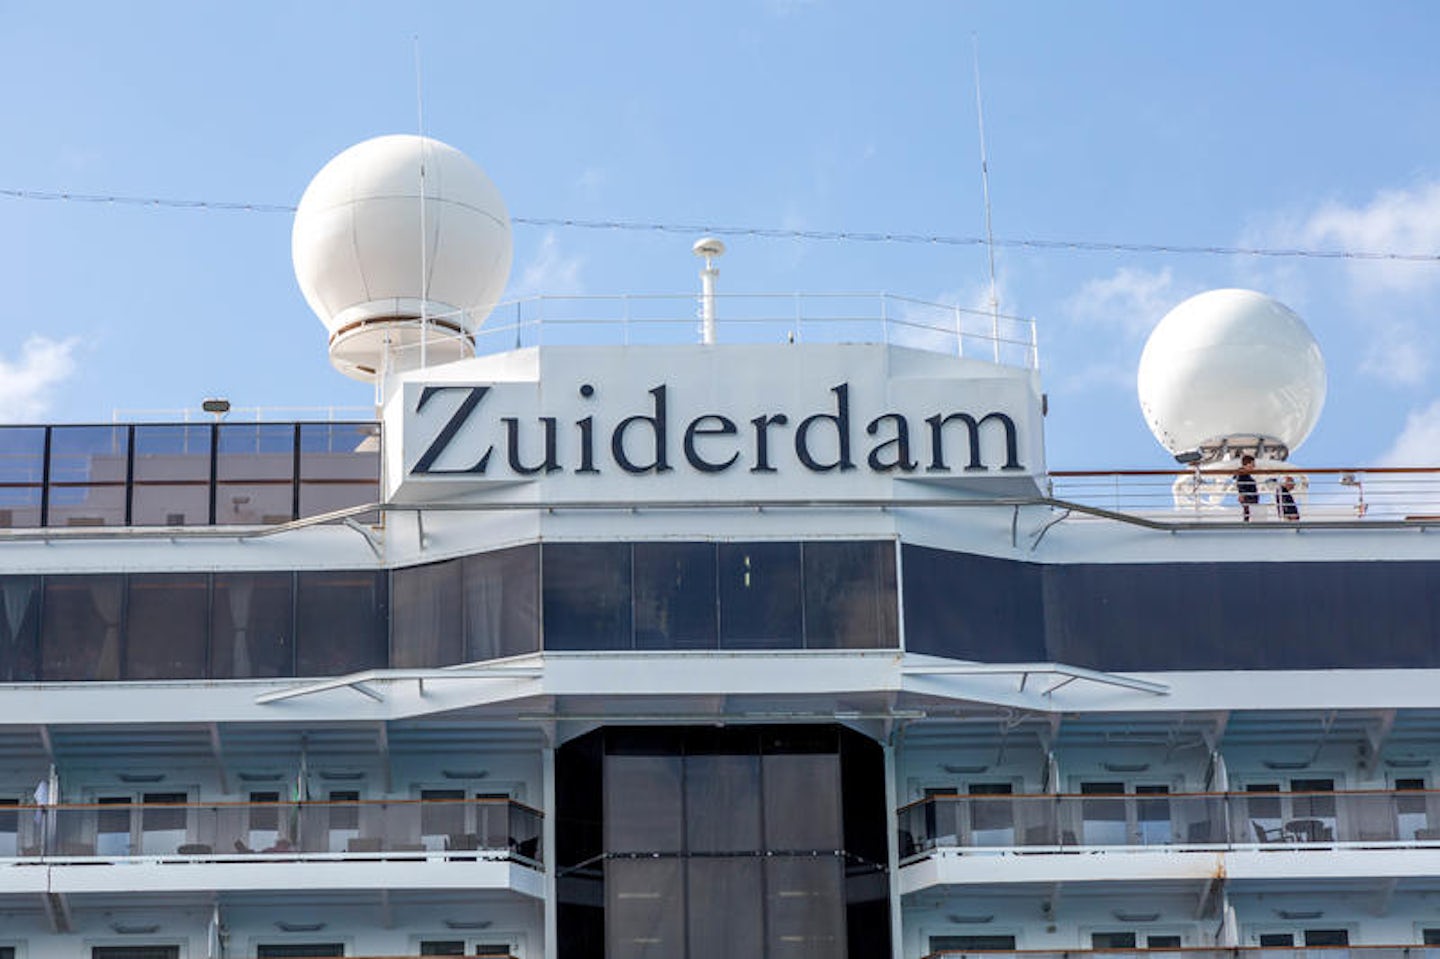 Ship Exterior on Zuiderdam